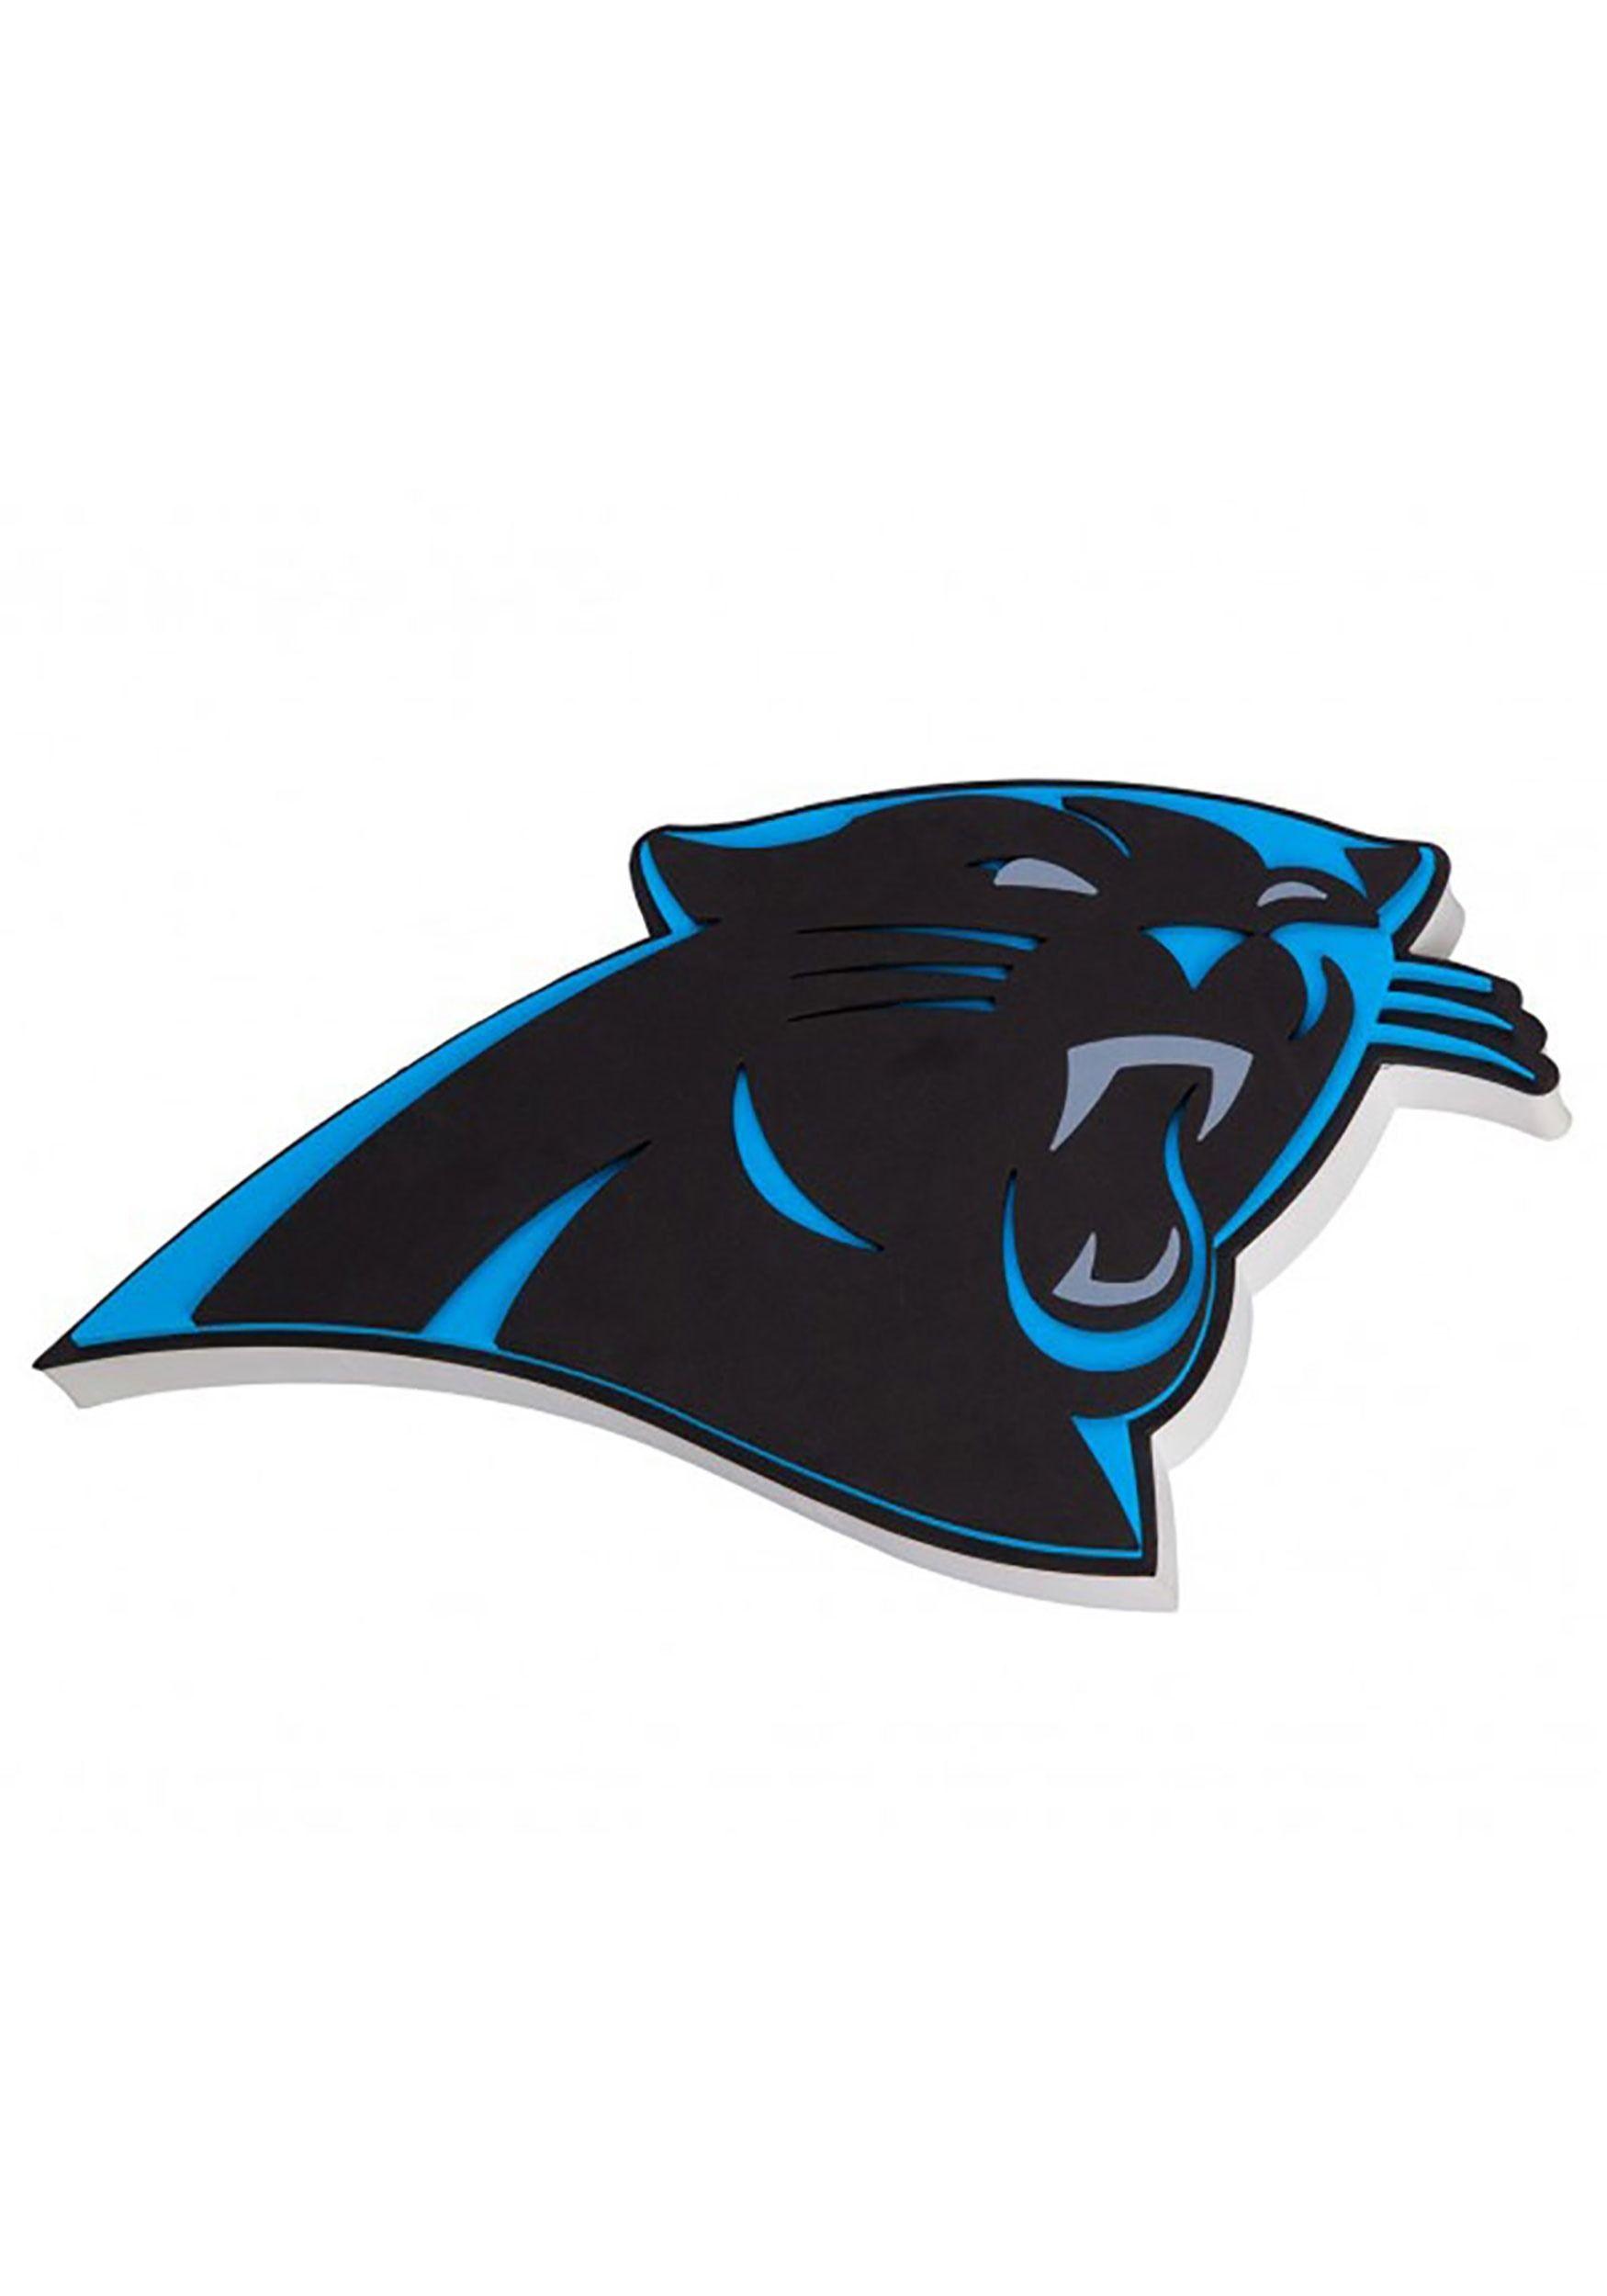 NFL Panthers Logo - Carolina Panthers NFL Logo Foam Sign